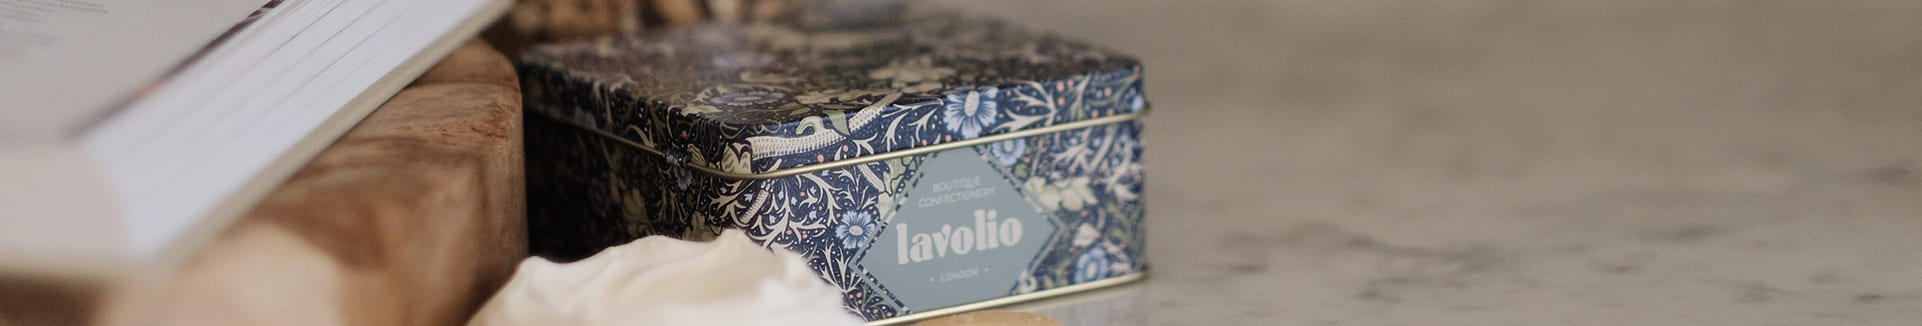 Lavolio boutique confectionary designer tins